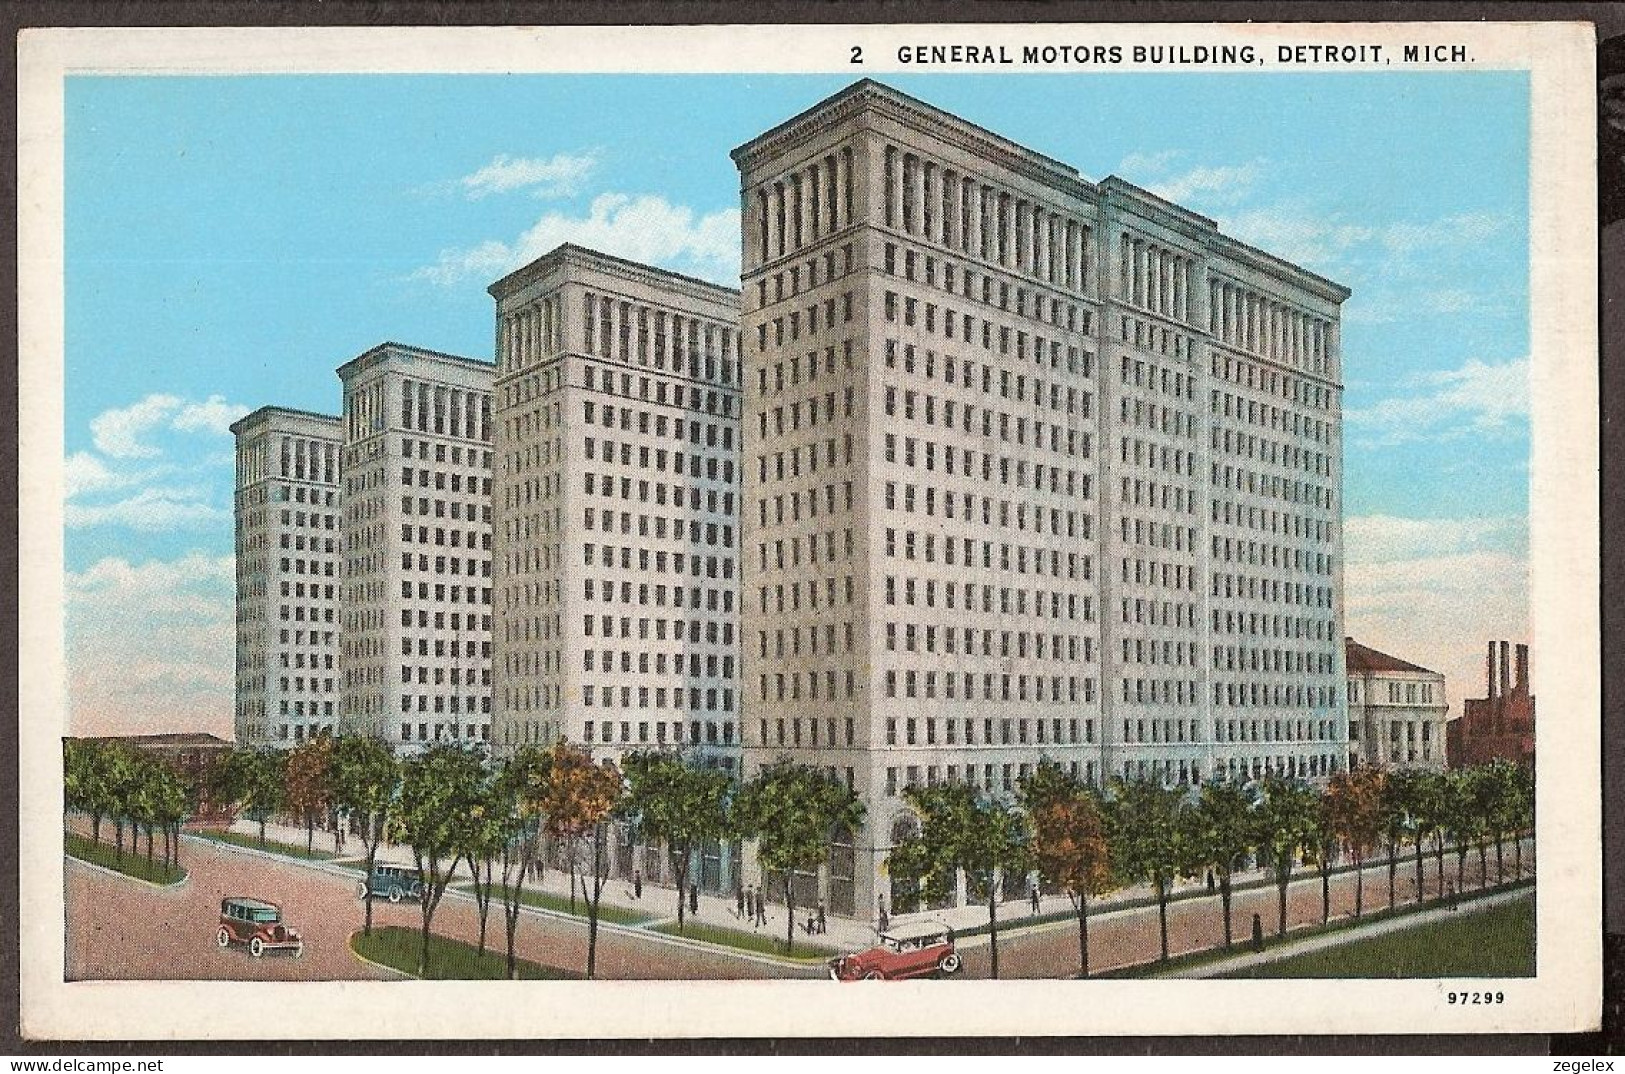 General Motors Building - Detroit, Michigan - Detroit